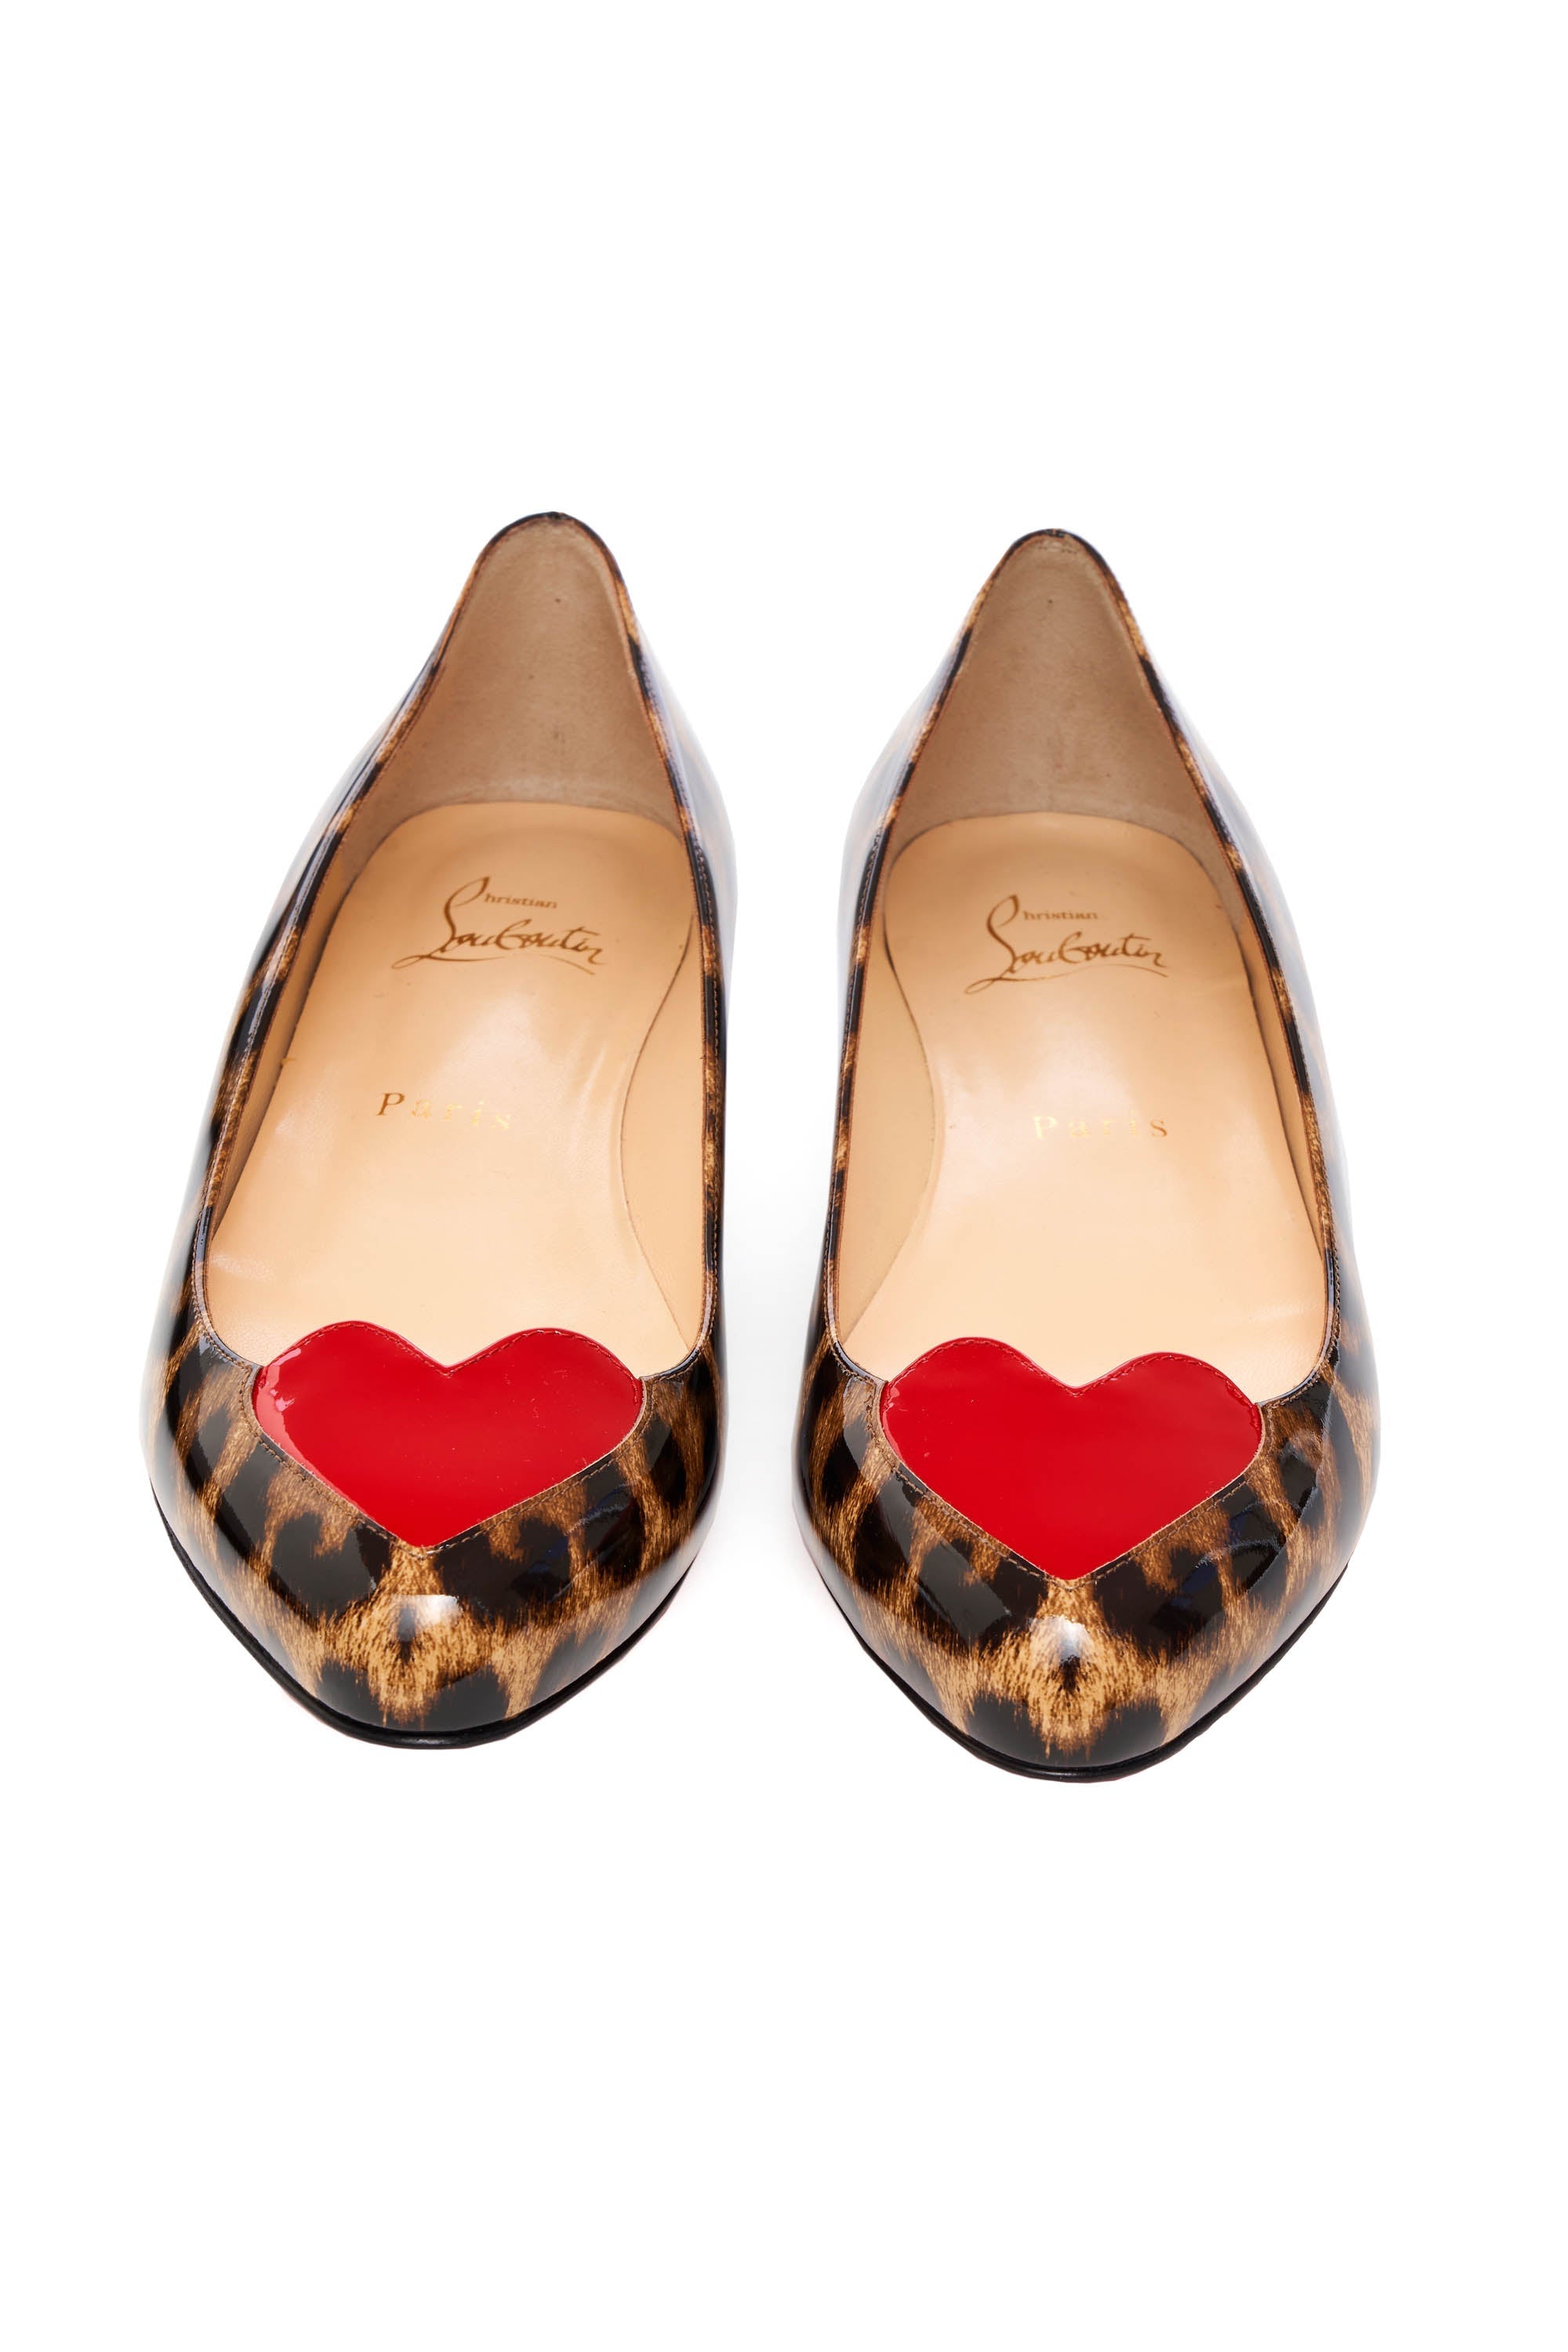 Christian Louboutin Leopard Point Toe Flats w/ Heart Shoes Size 36